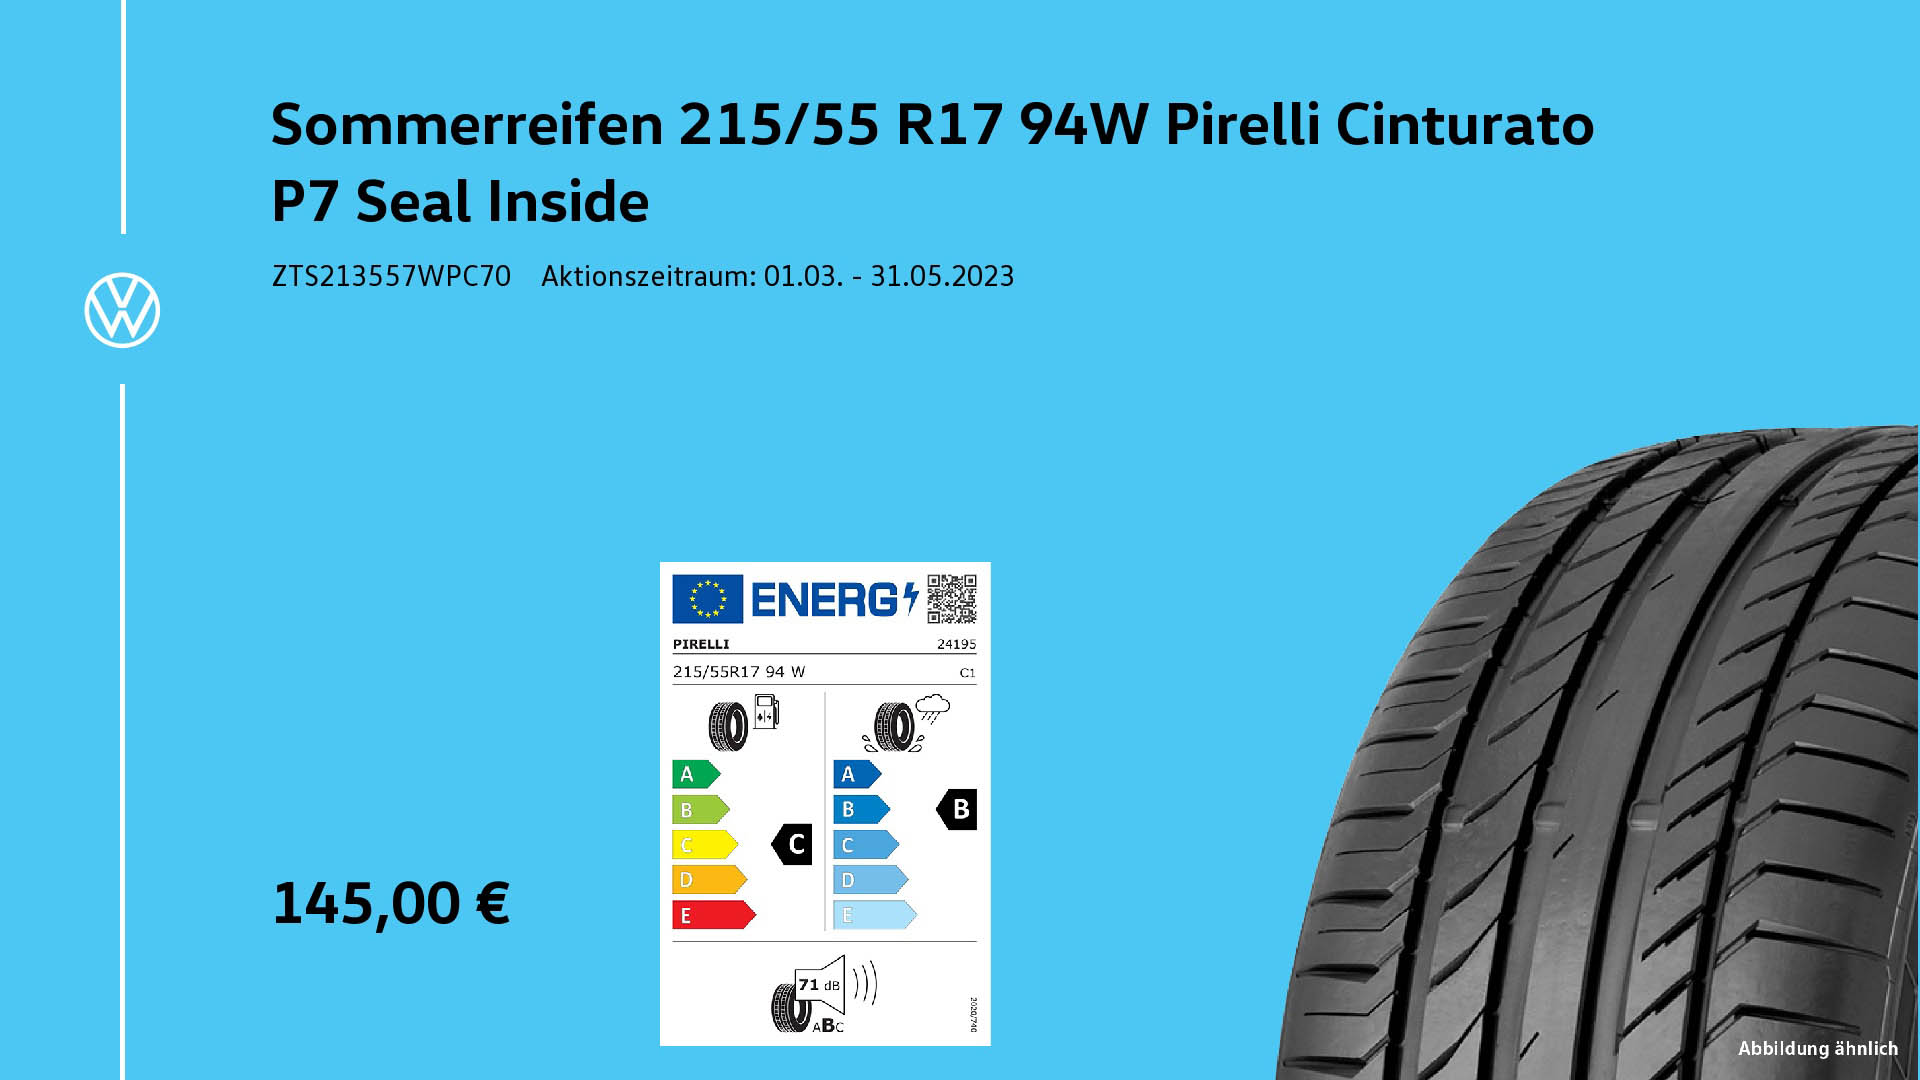 Sommerreifen Pirelli Cintruato P7 Seal Inside 254